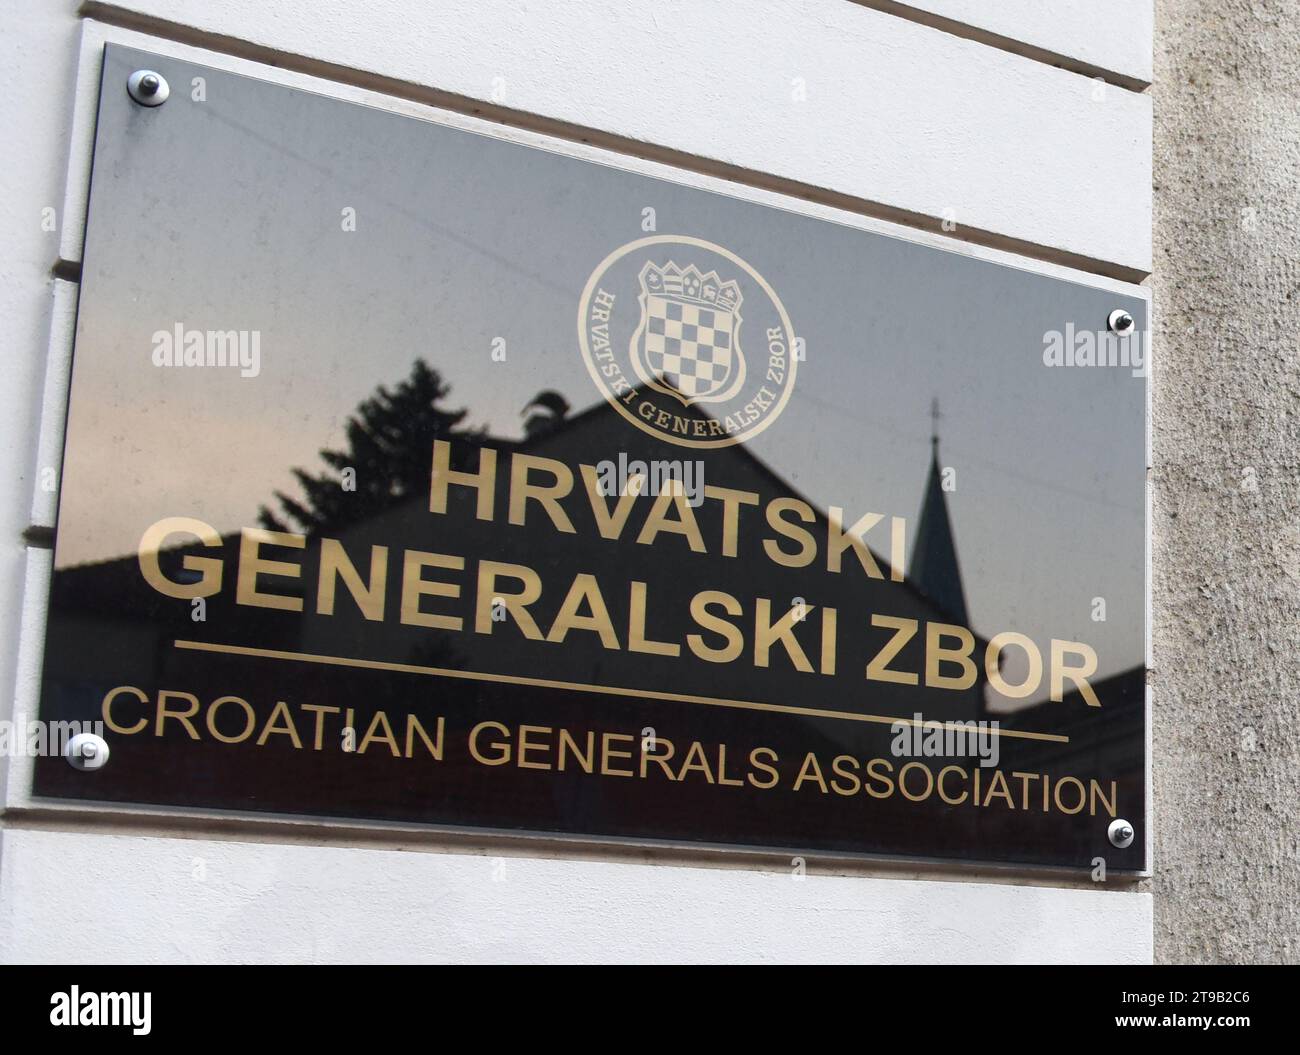 Zagreb, Croatia - July 8, 2021: The sign on Croatian Generals Association (Hrvatski generalski zbor) in Zagreb, Croatia. Stock Photo